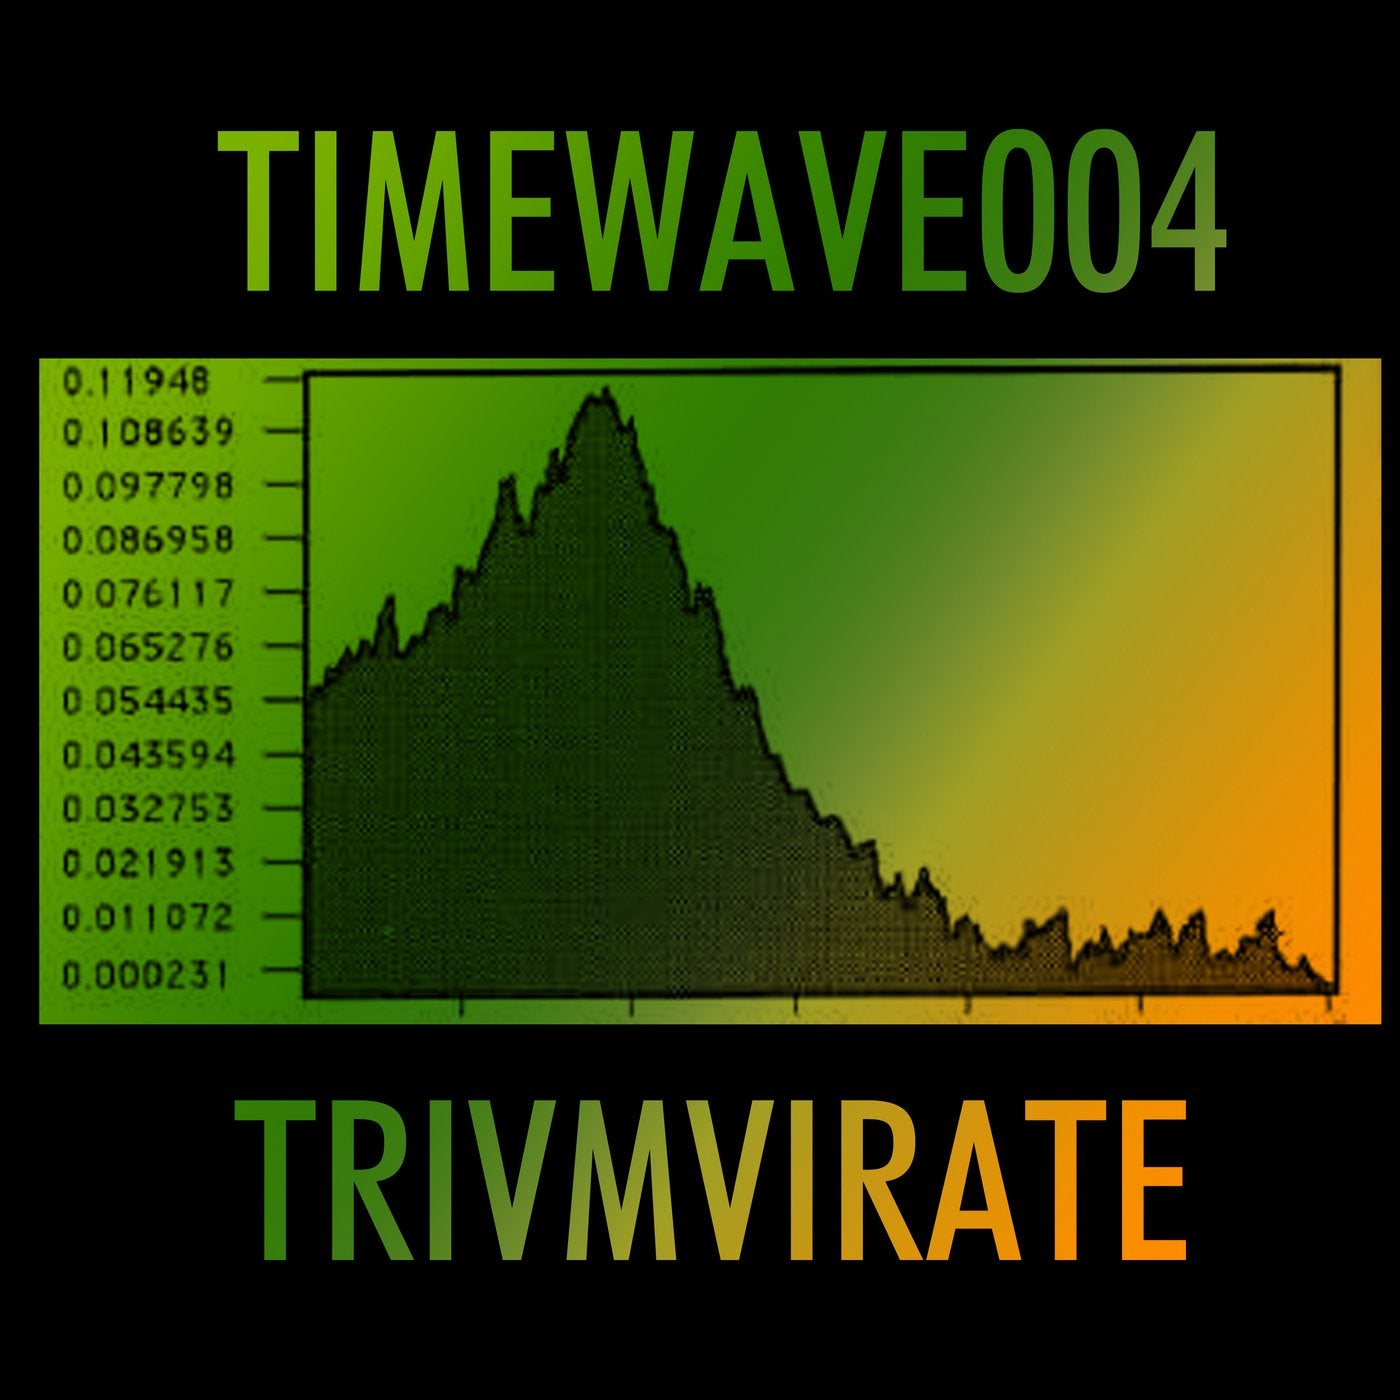 TimeWave004